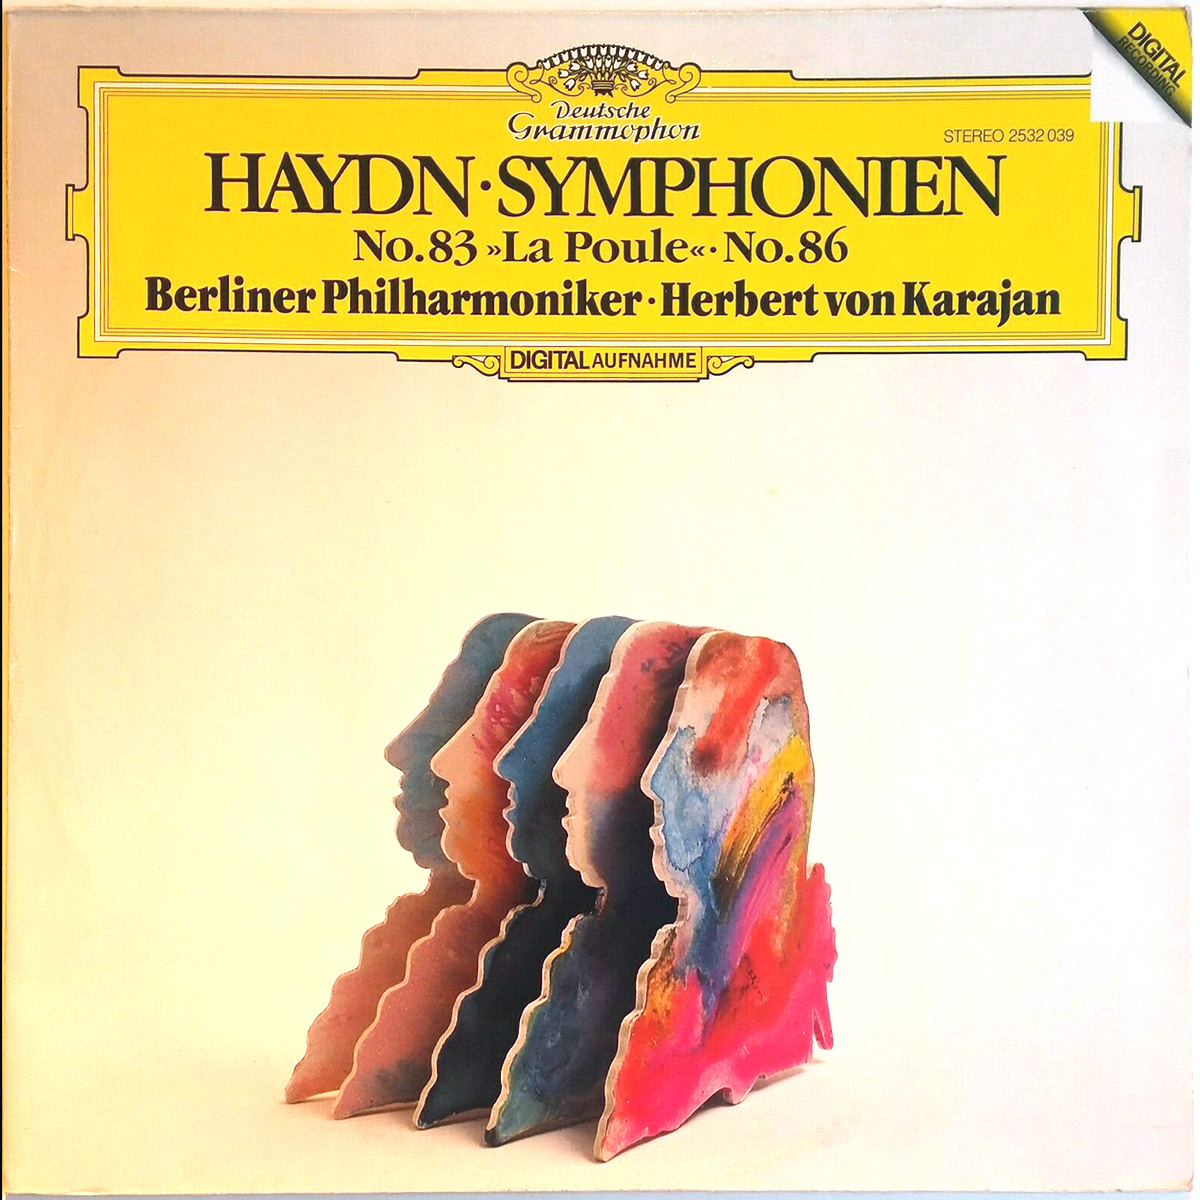 DGG 2532038 Haydn Symphonies 83 86 Karajan DGG Digital Aufnahme